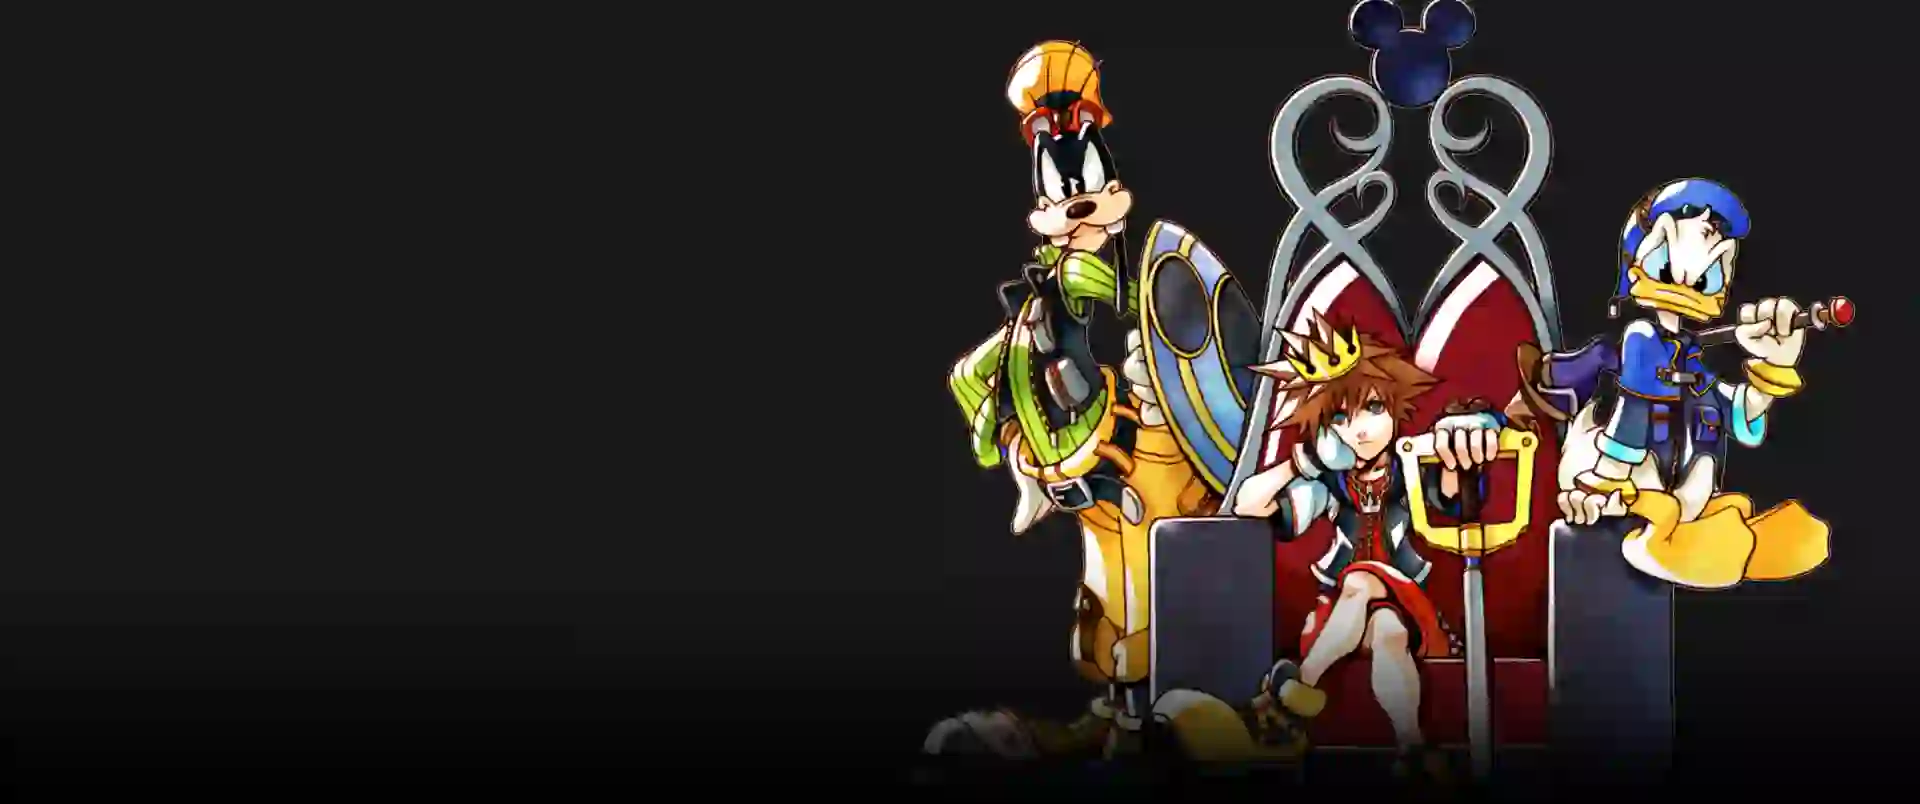 Reverse Rebirth Reverse Rebirth Kingdom Hearts Re Chain Of Memories Kingdom Hearts Hd 1 5 Remix Gamer Guides